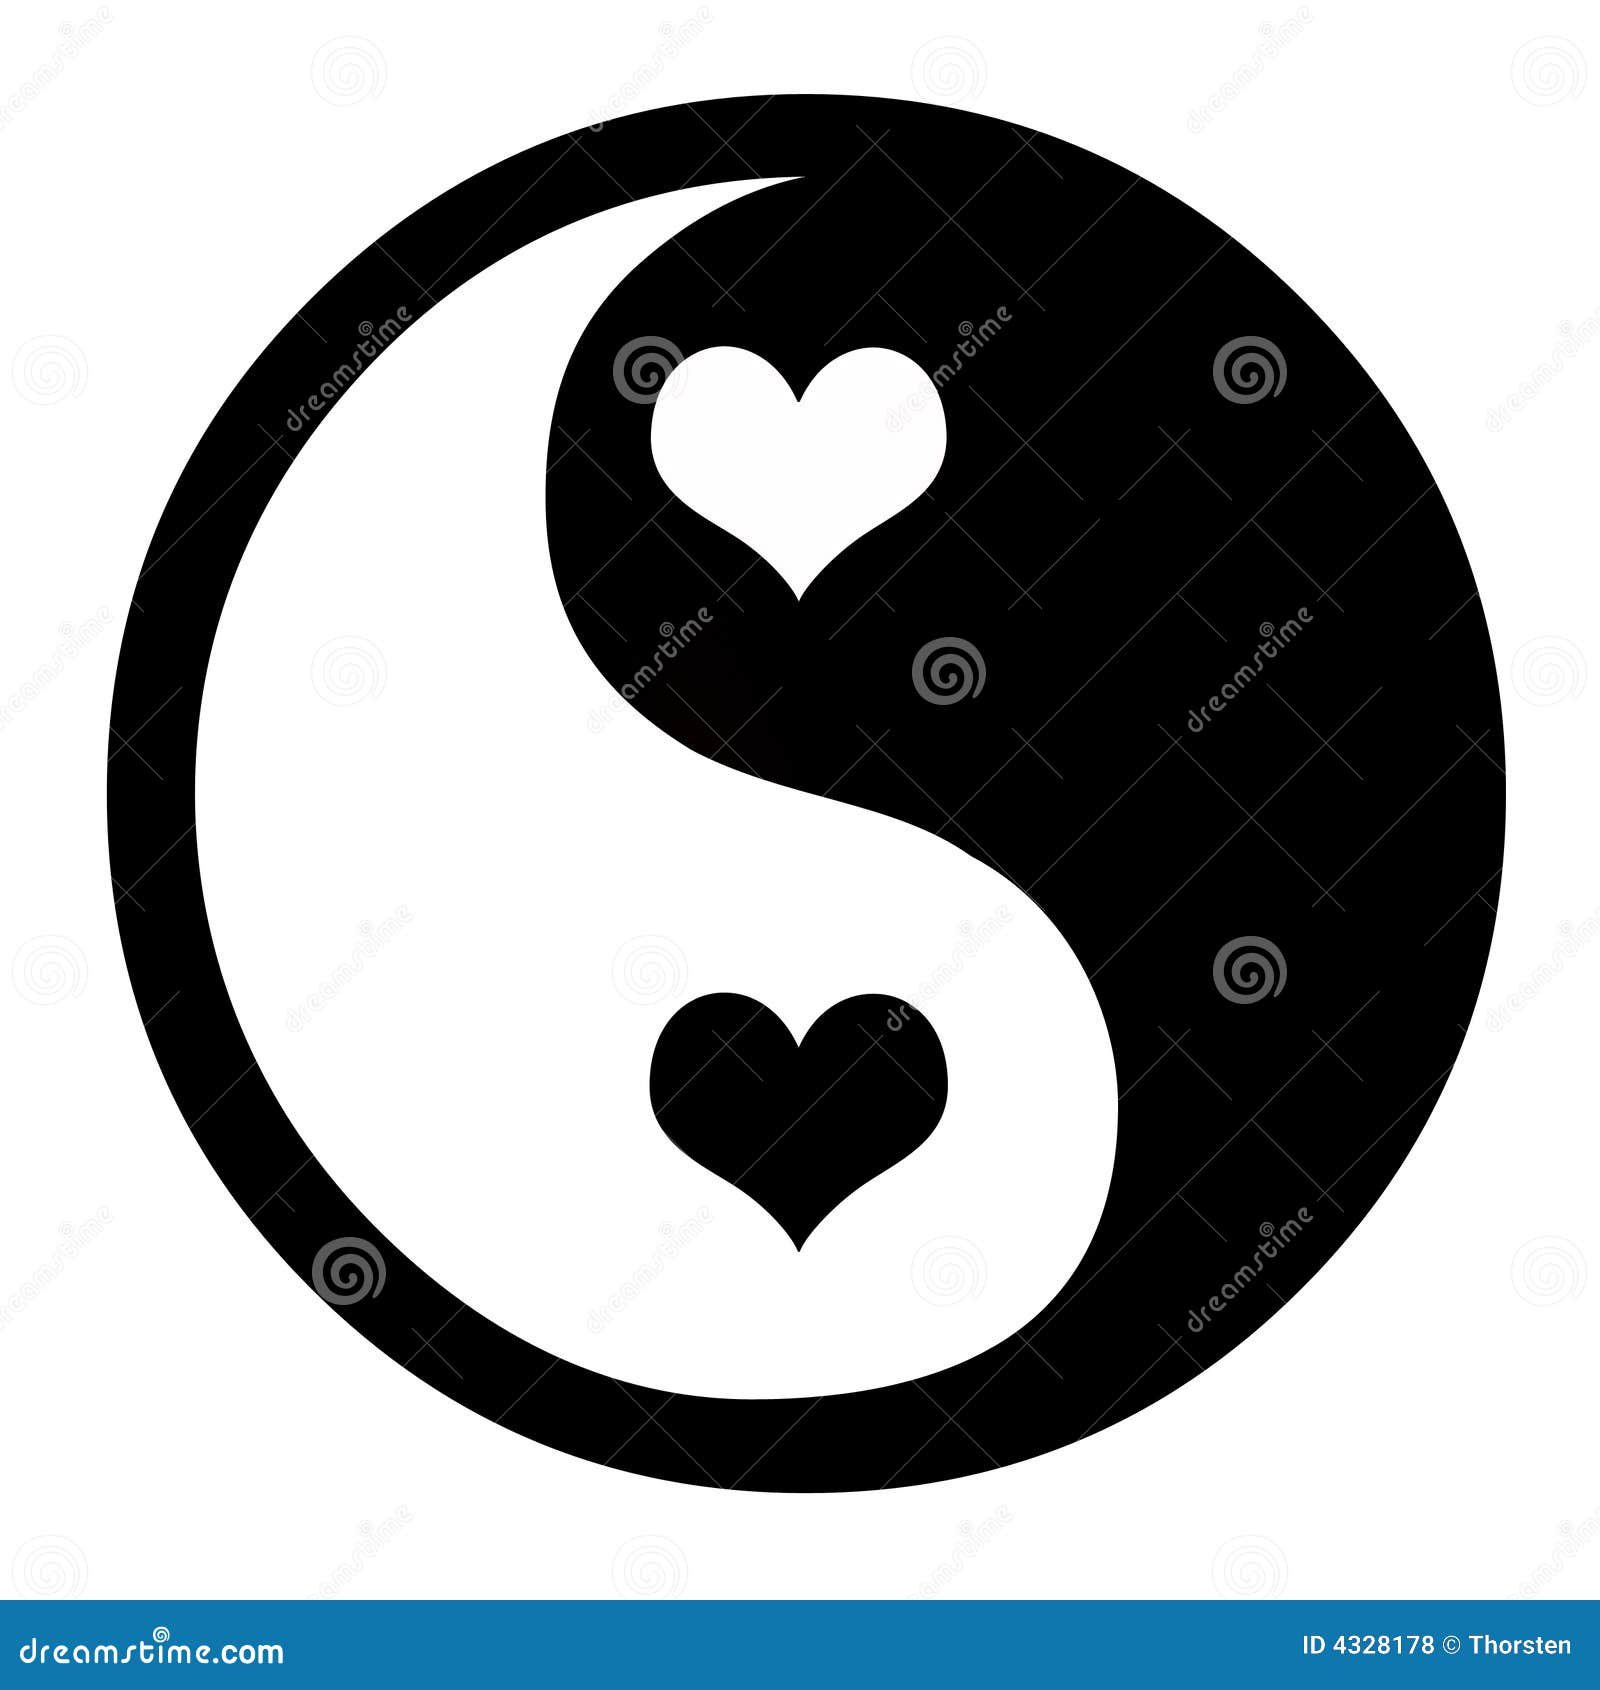 Yin Yang With Hearts Stock Photo | CartoonDealer.com #4328178